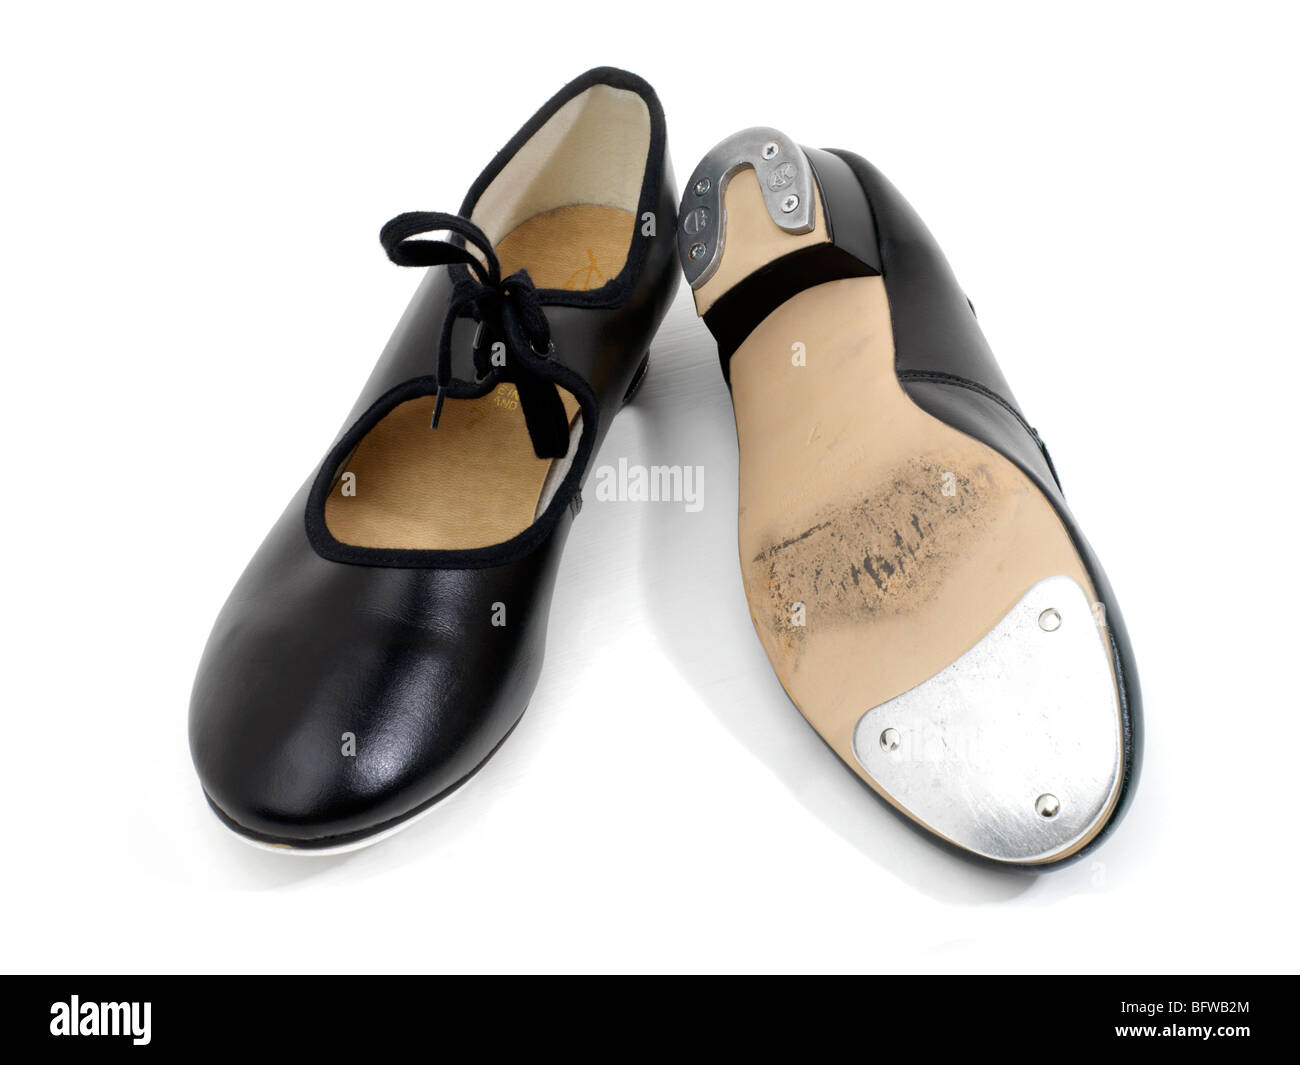 ballet chaussure et tap chaussure order a02b6 01570